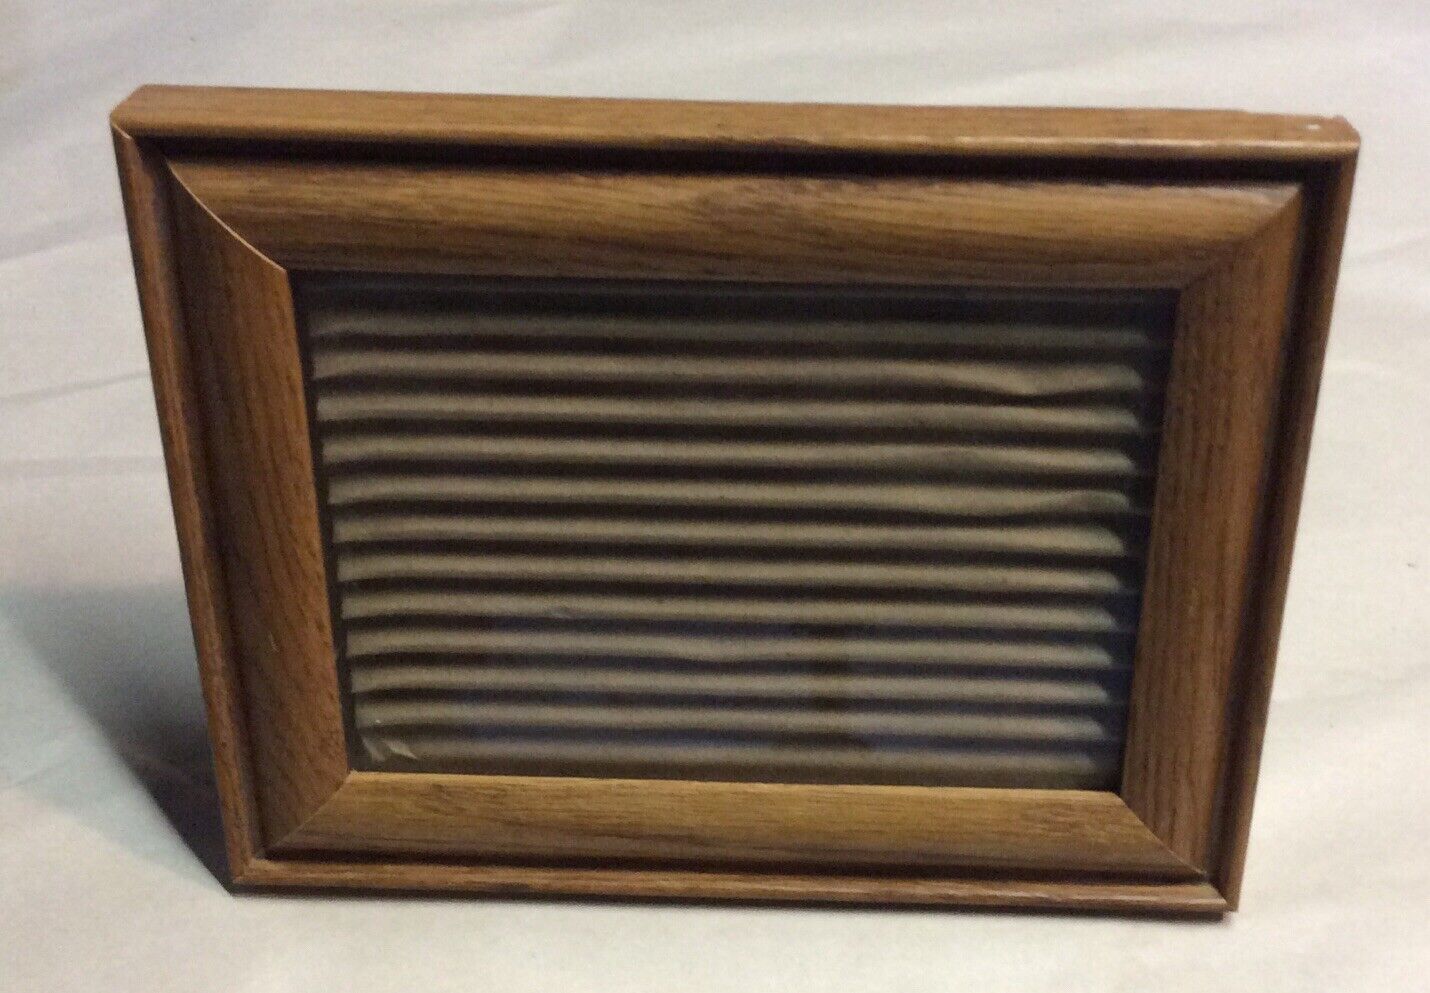 Vintage Wooden Photo Frame Size 5” X 7” Brown Color